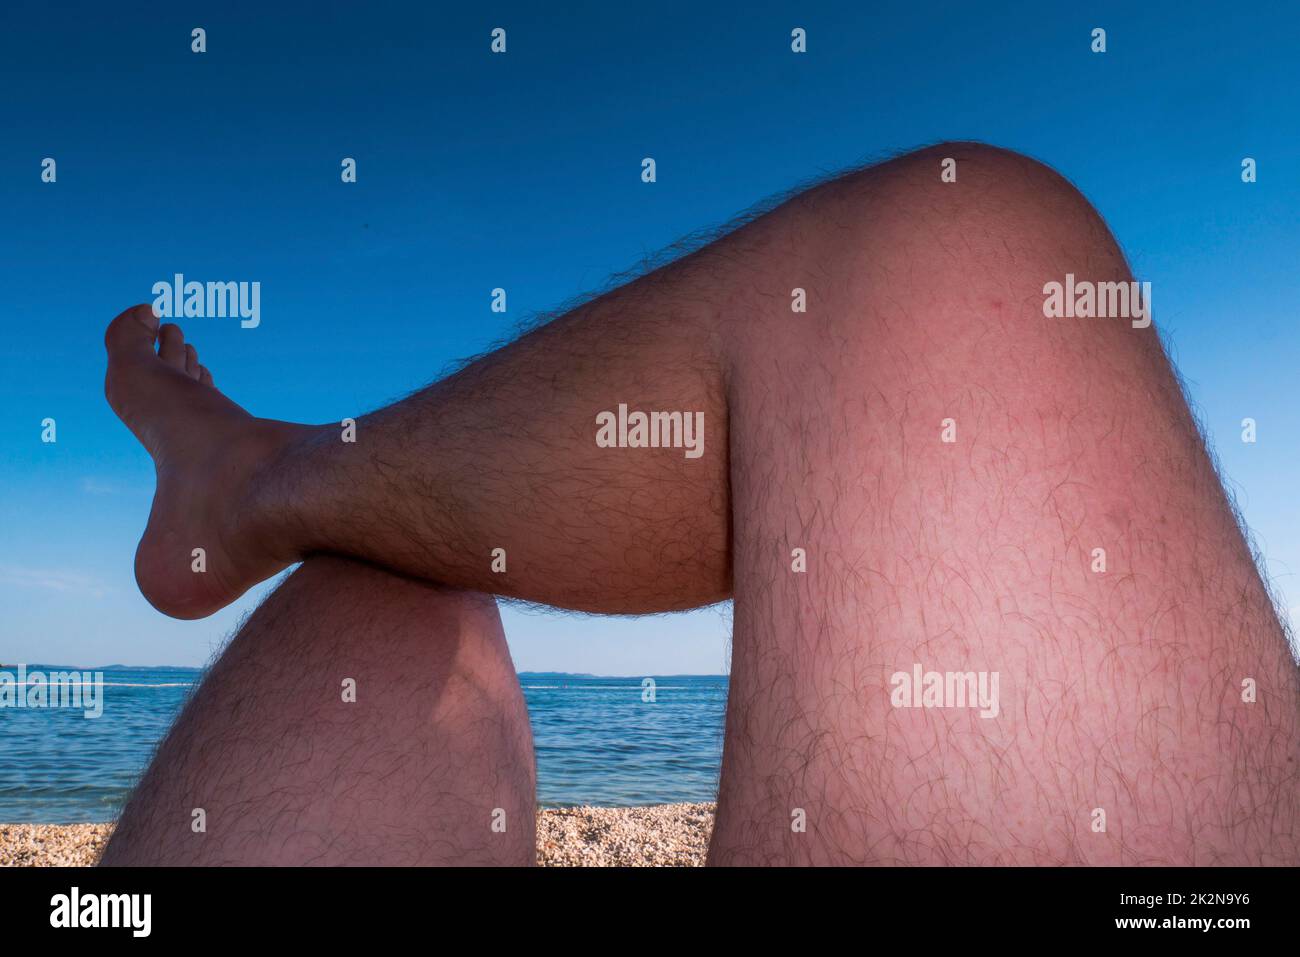 Man's legs are sunbathing on a beach Stock Photo